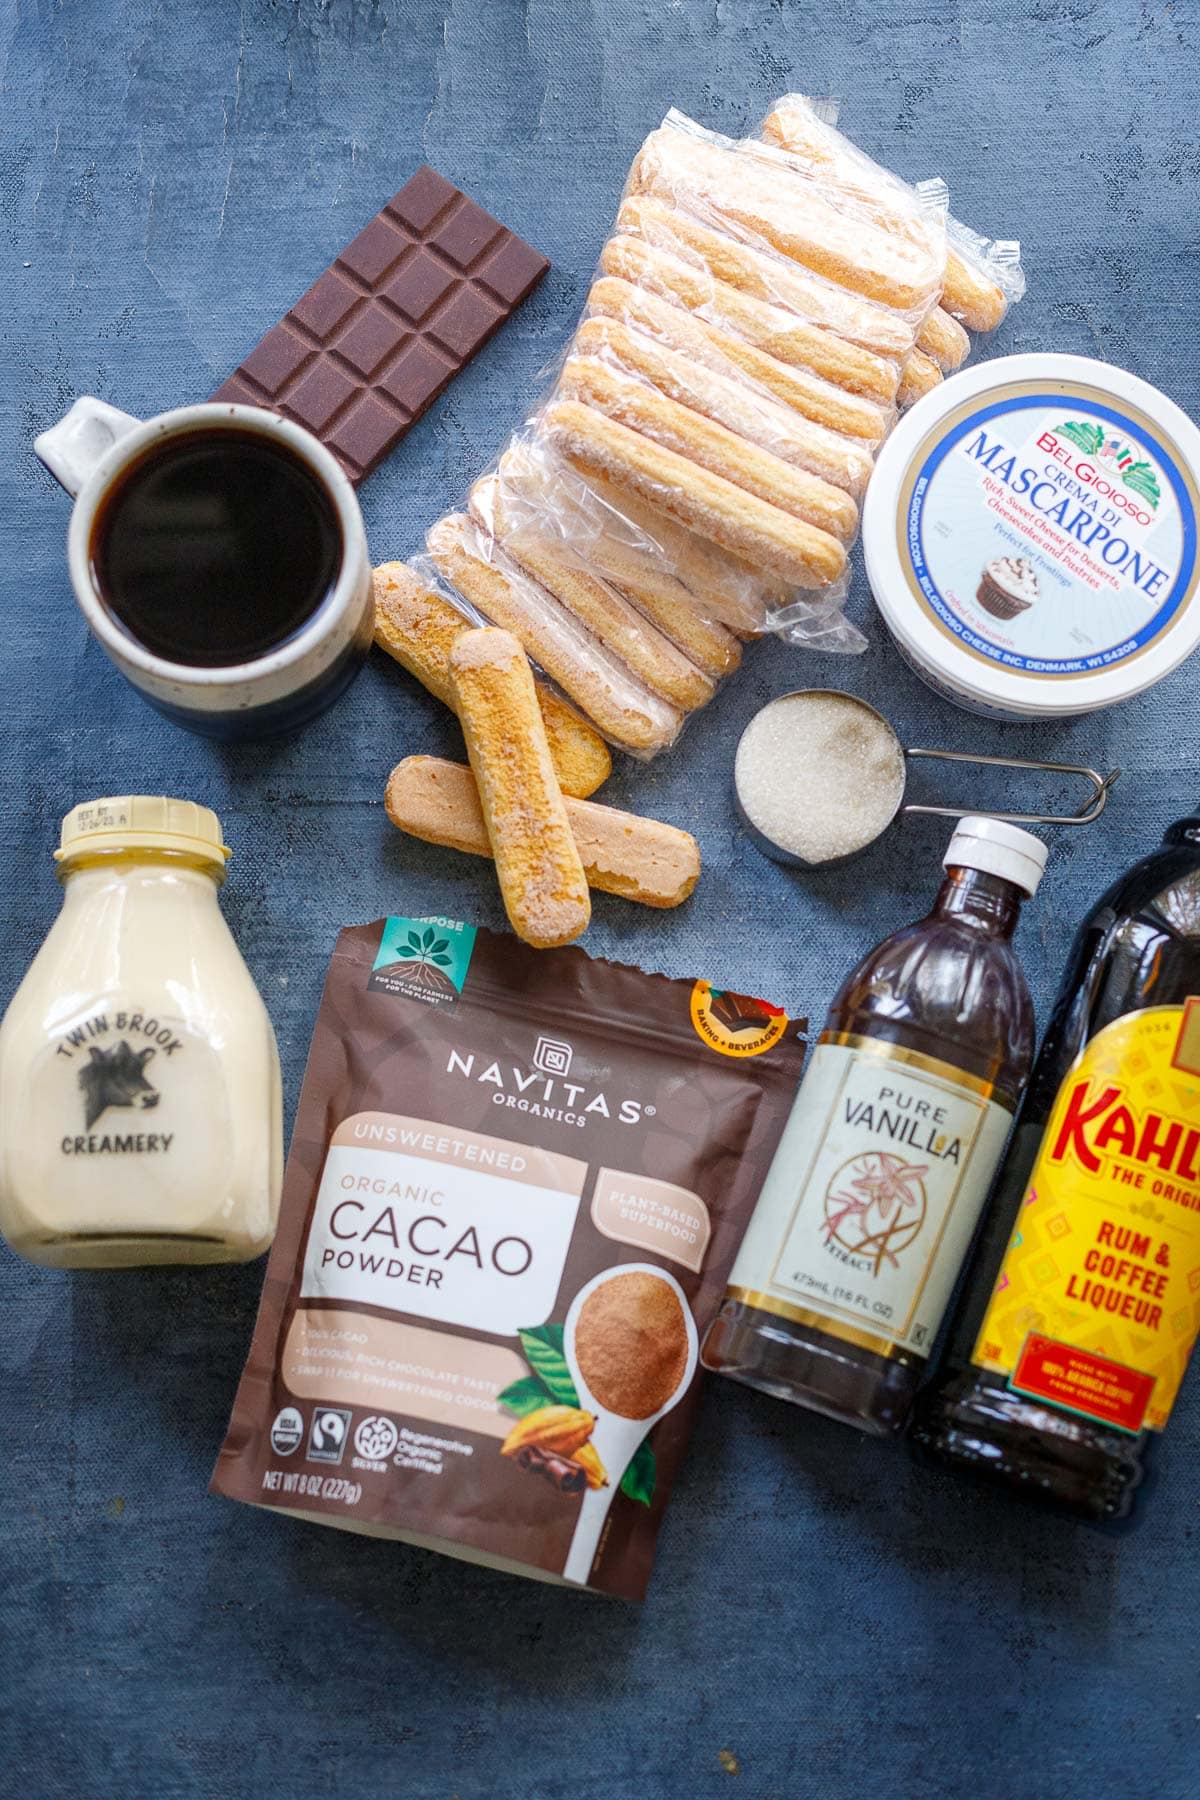 ingredients for tiramisu on table - coffee, ladyfingers, chocolate, mascarpone, sugar, cream, cacao powder, vanilla, Kahlua